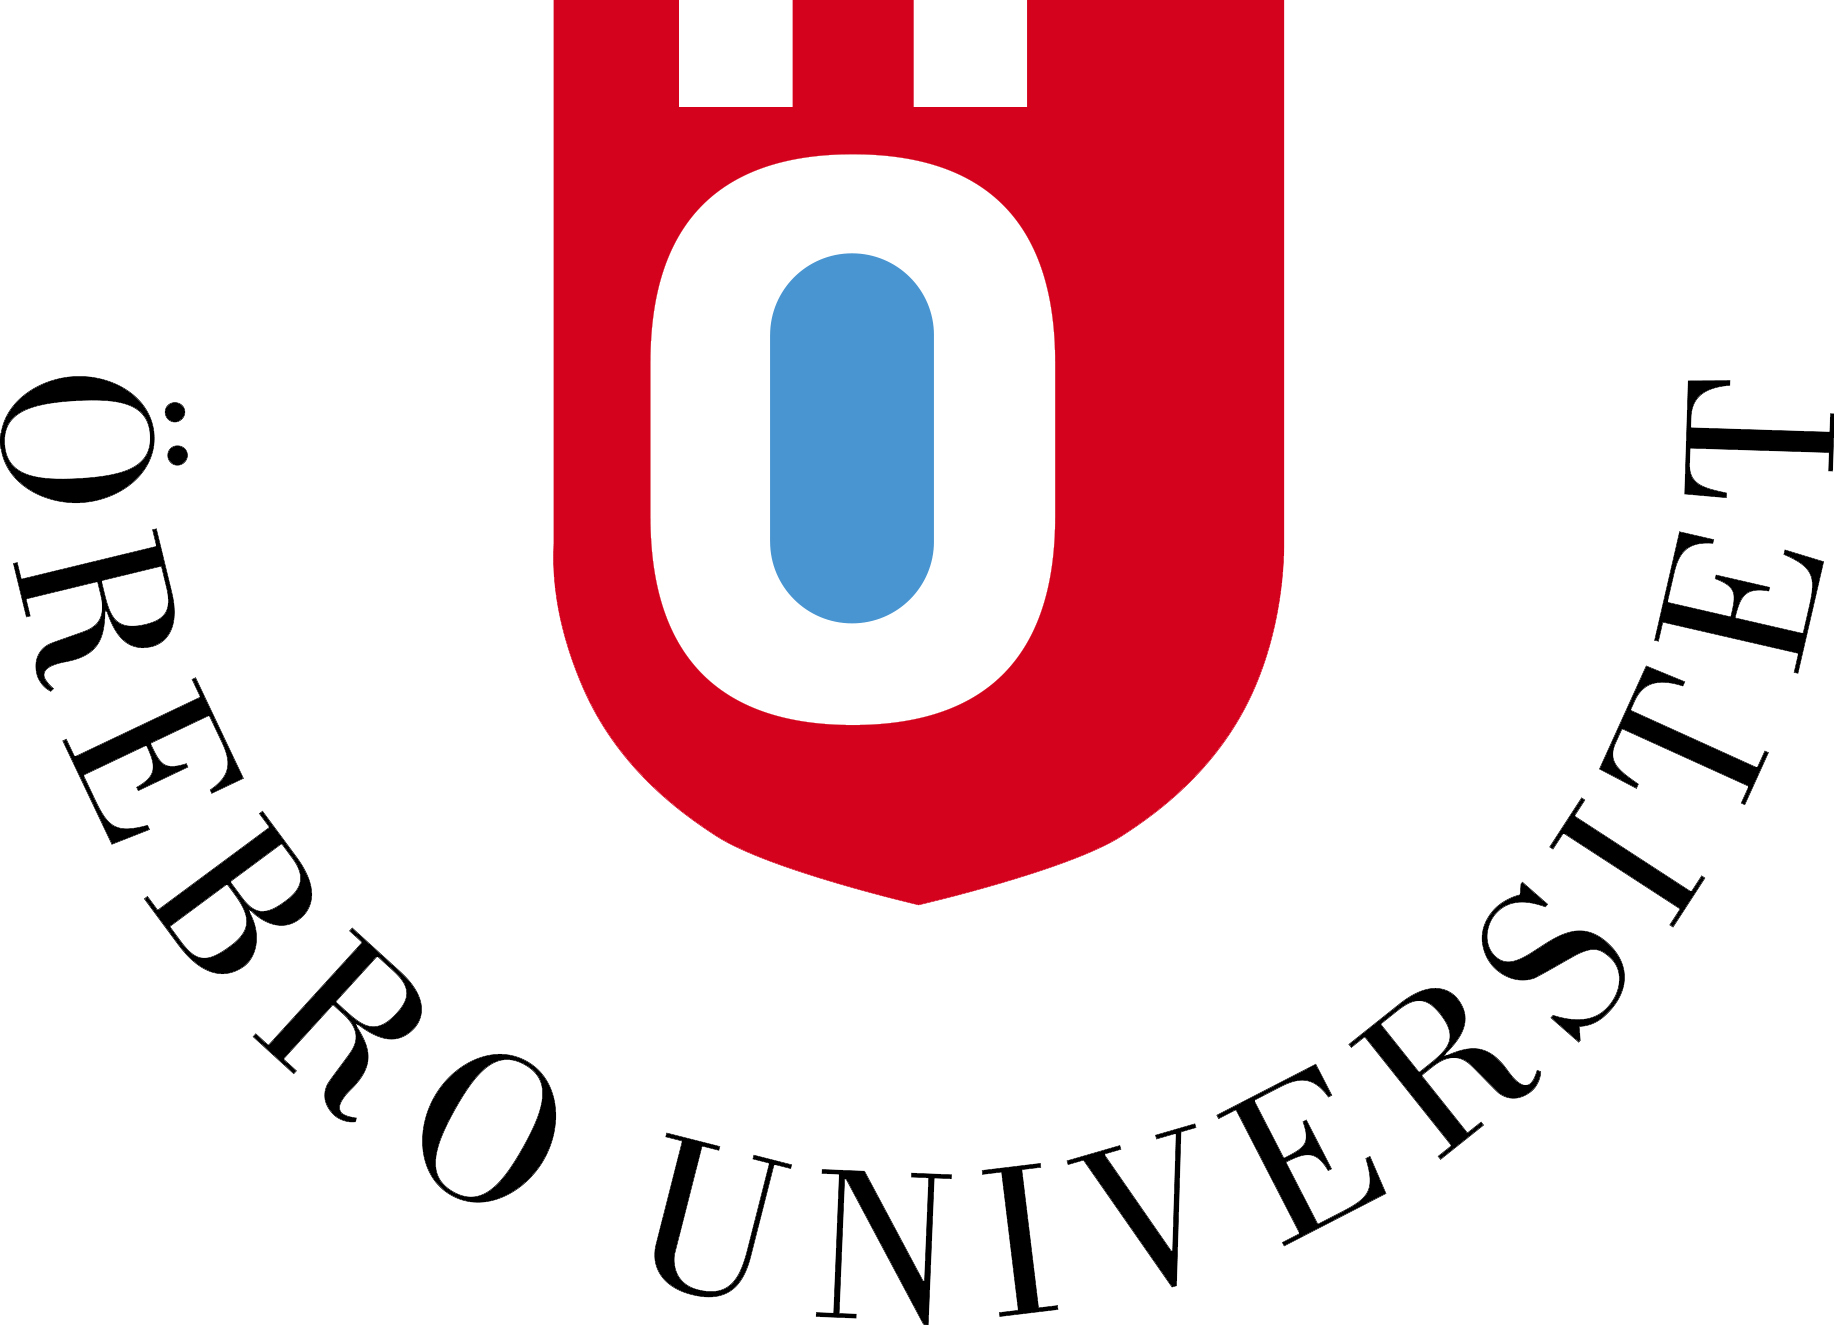 Örebro Universitet